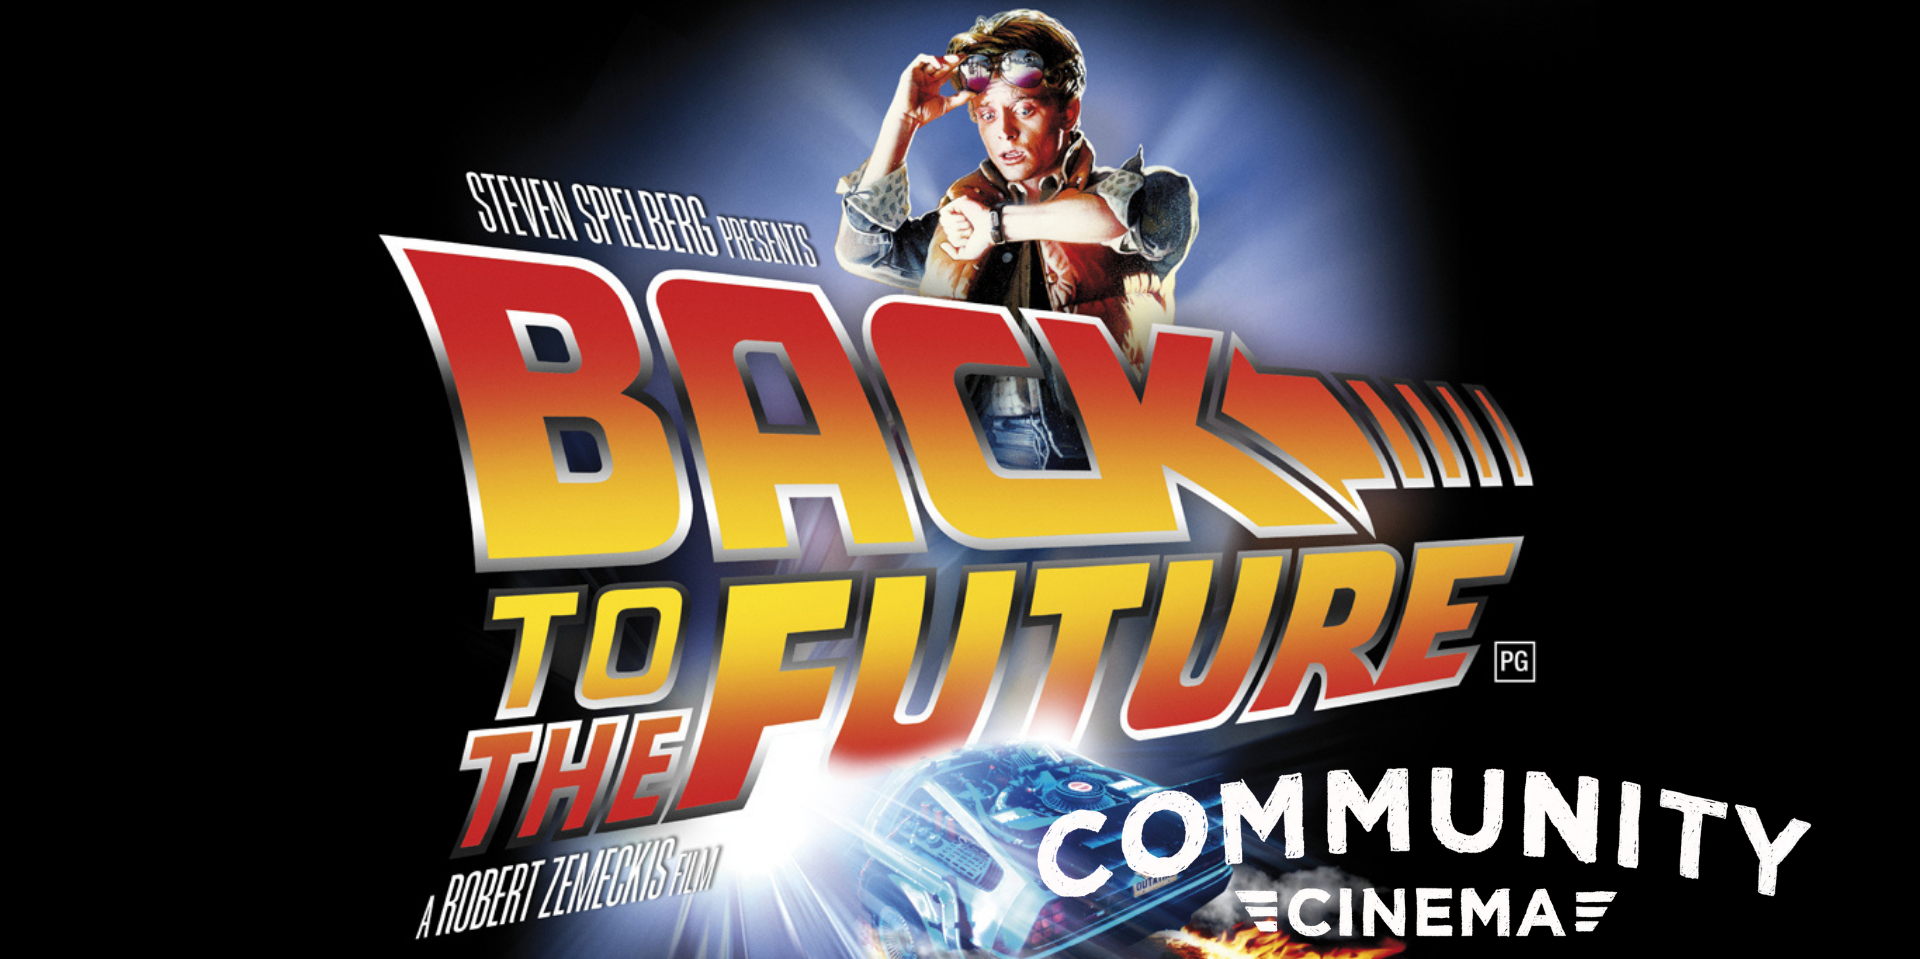 Back To The Future (1985) - Community Cinema & Amphitheater